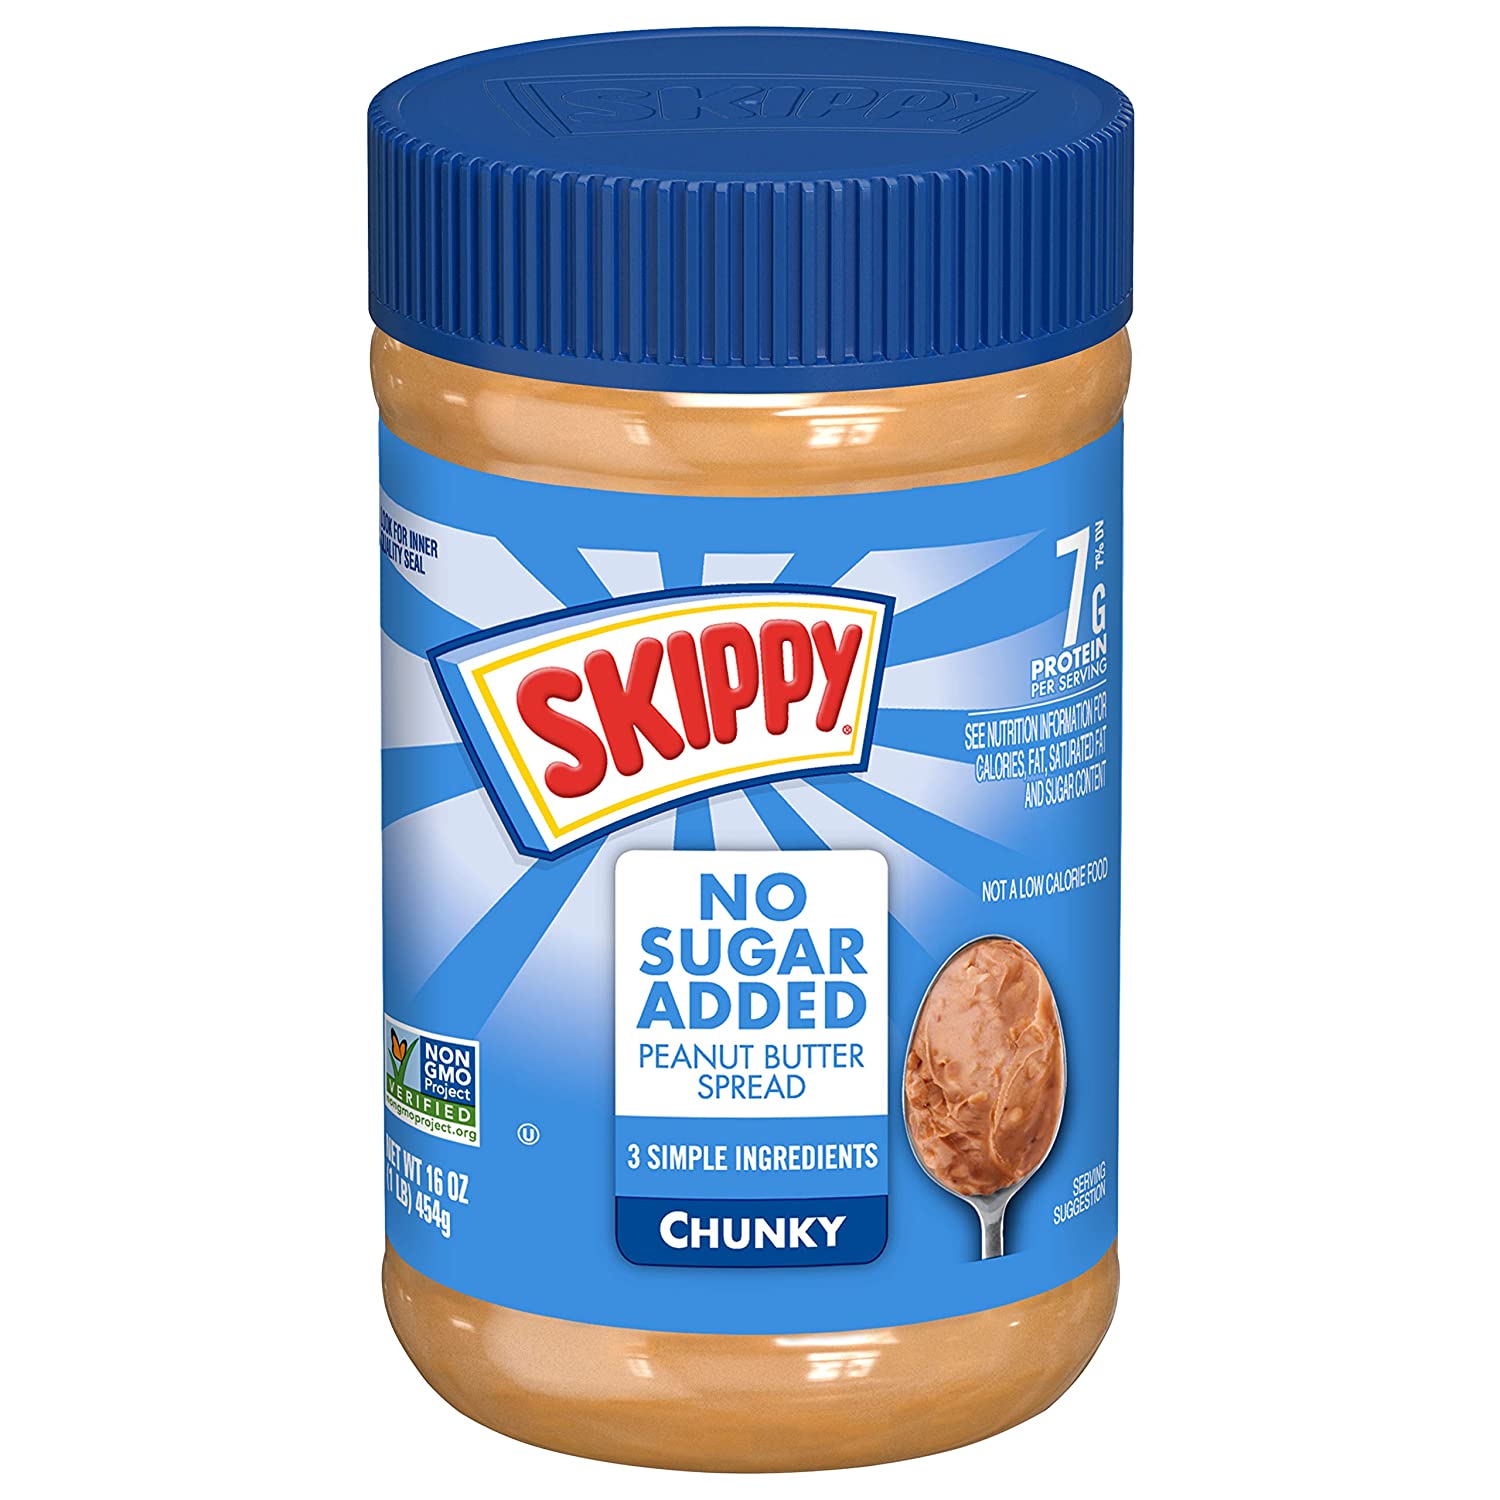 Skippy Chunky Peanut Butter Spread No Sugar Added (454g) Skippy